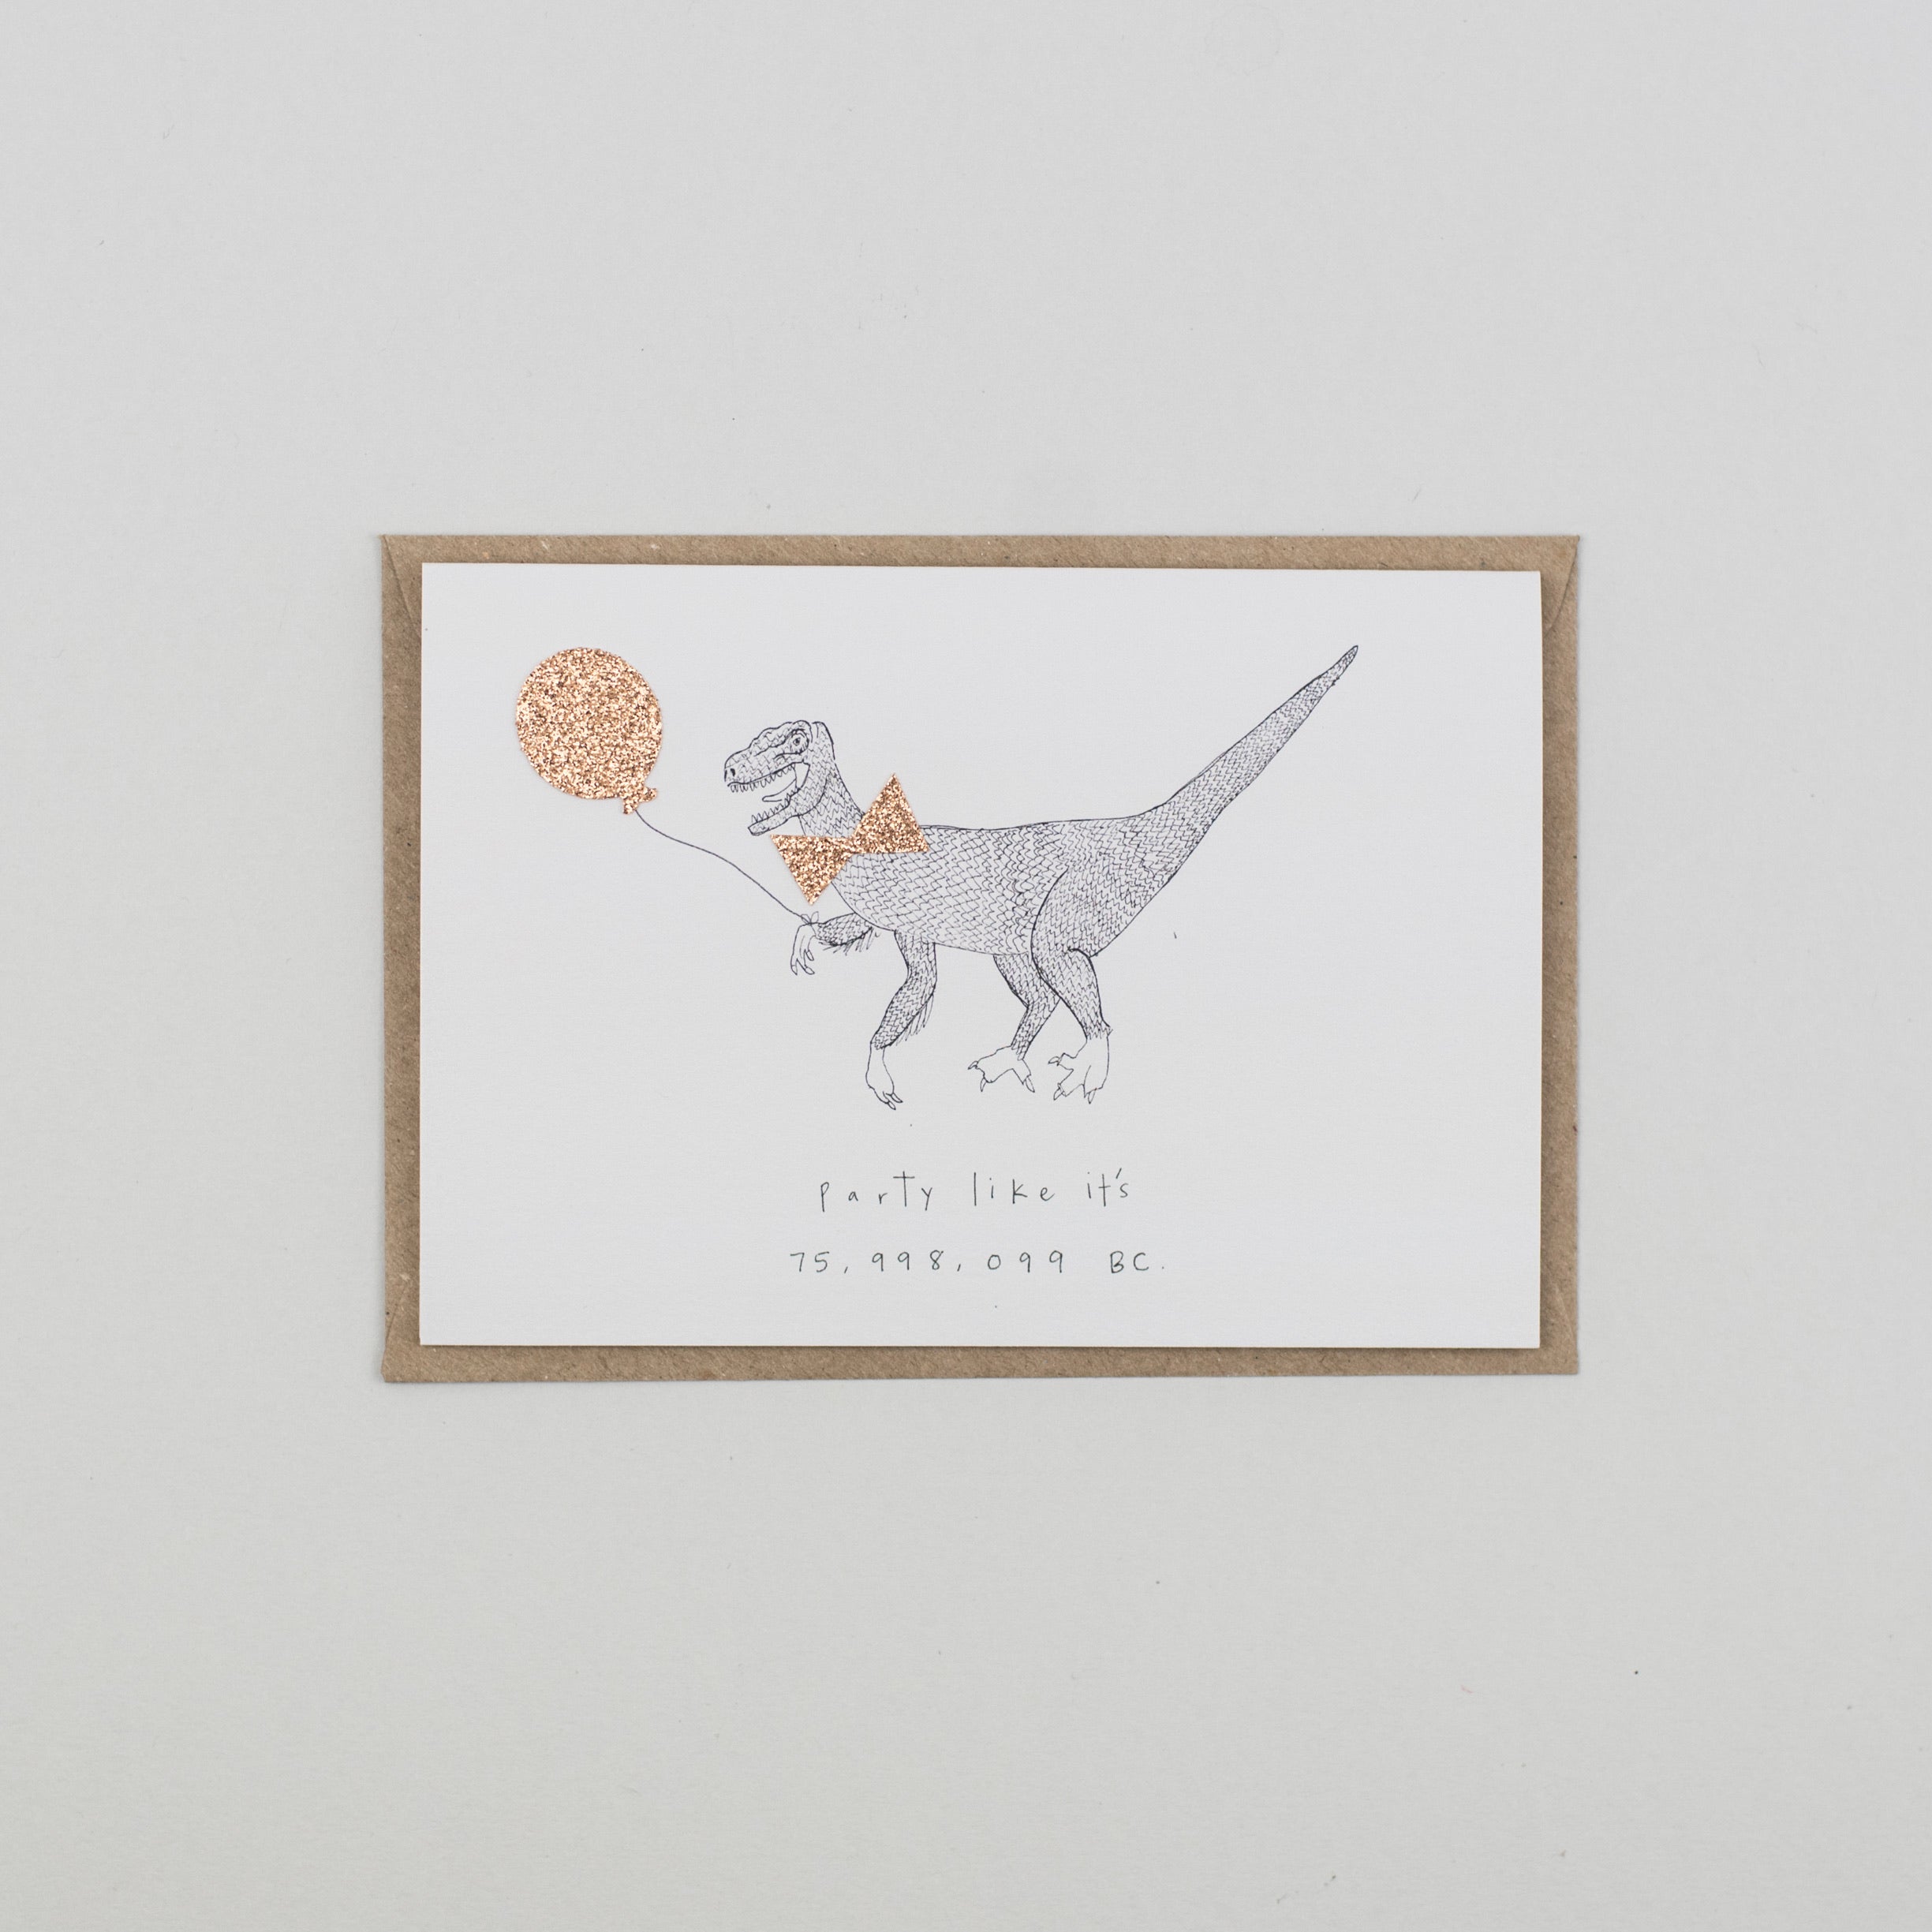 Party Like Dinosaur Greetings Card